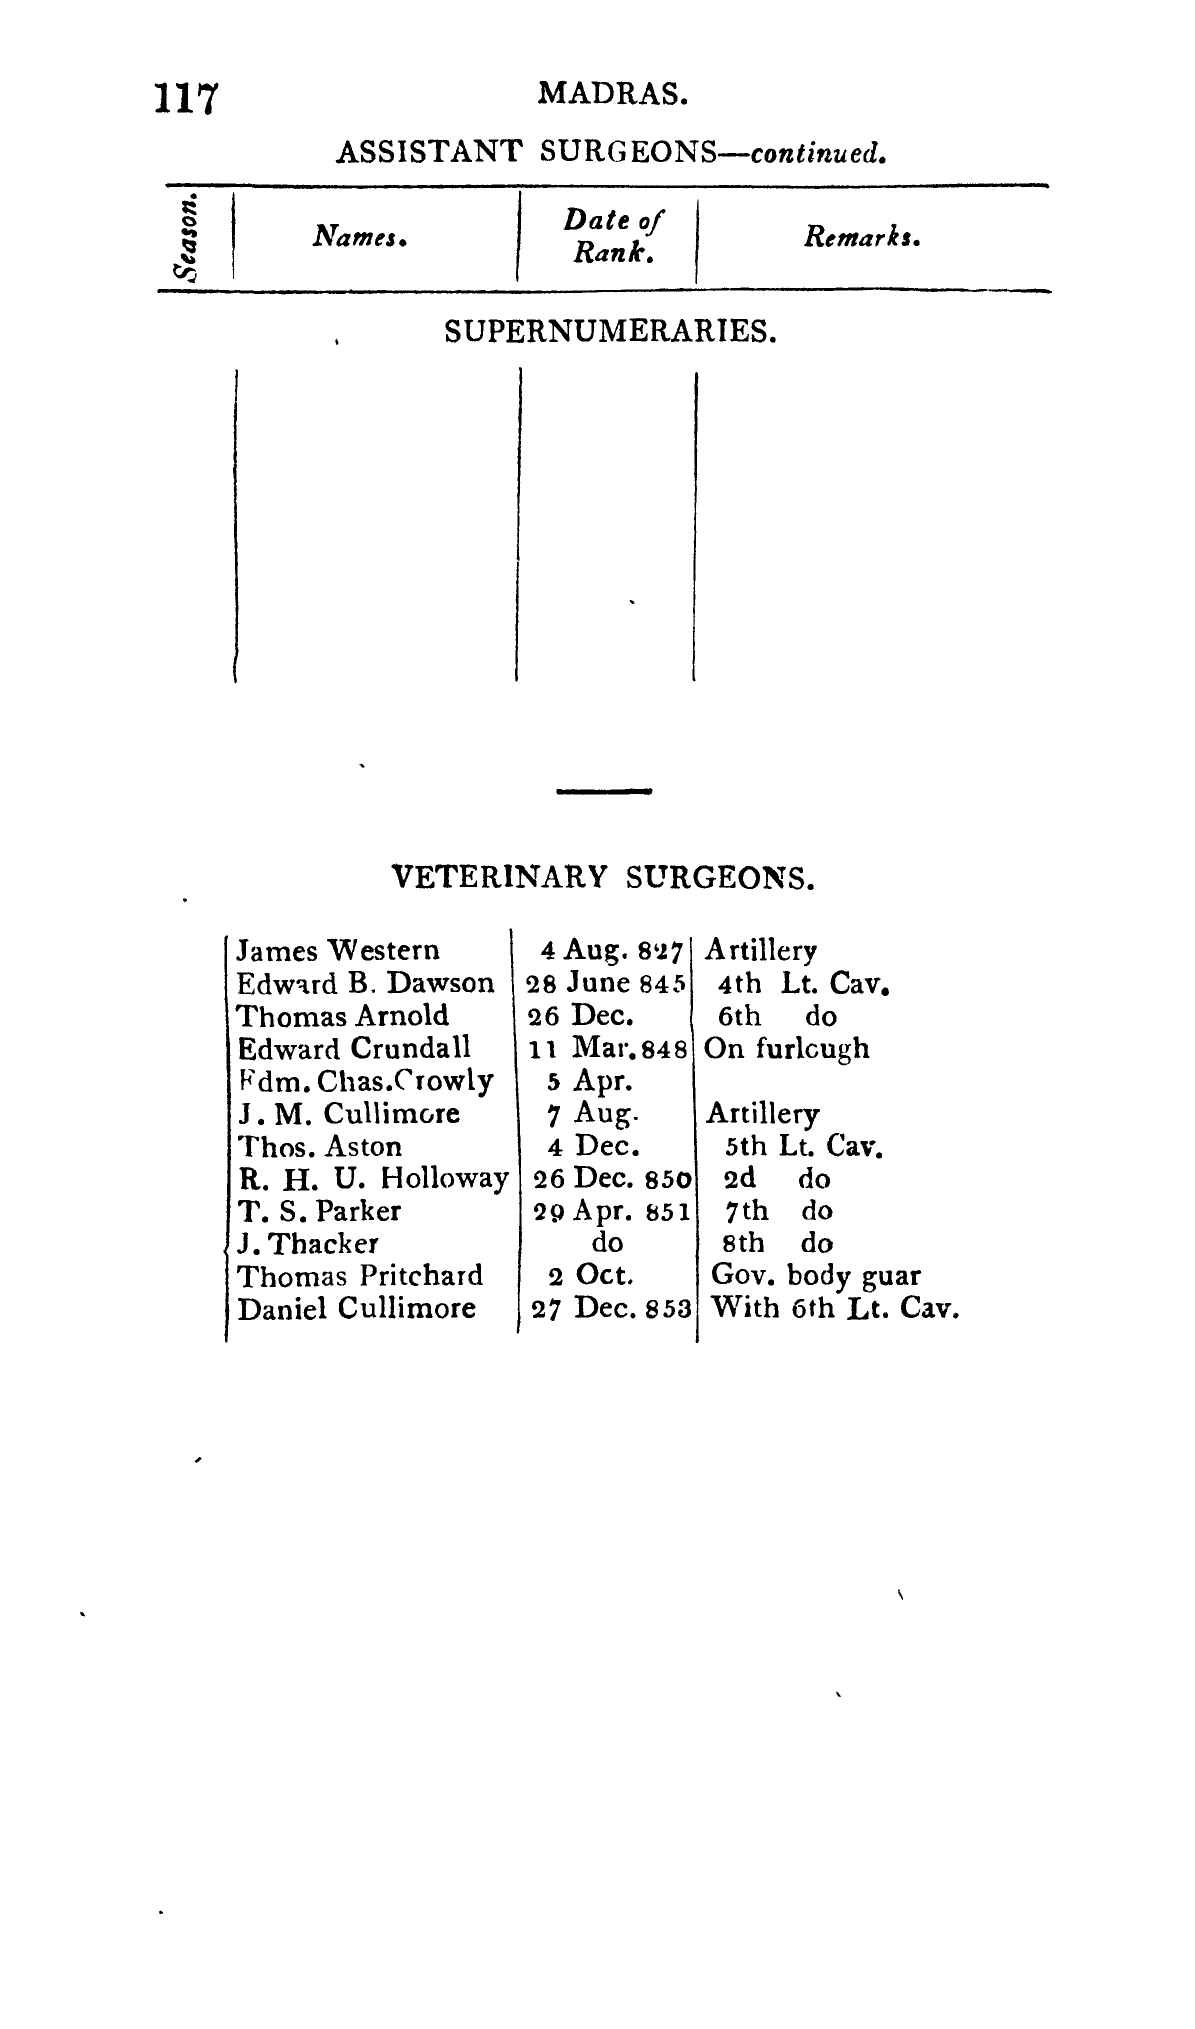 Edward B. Dawson,Veterinary Surgeon, East India Register & Army List 1855